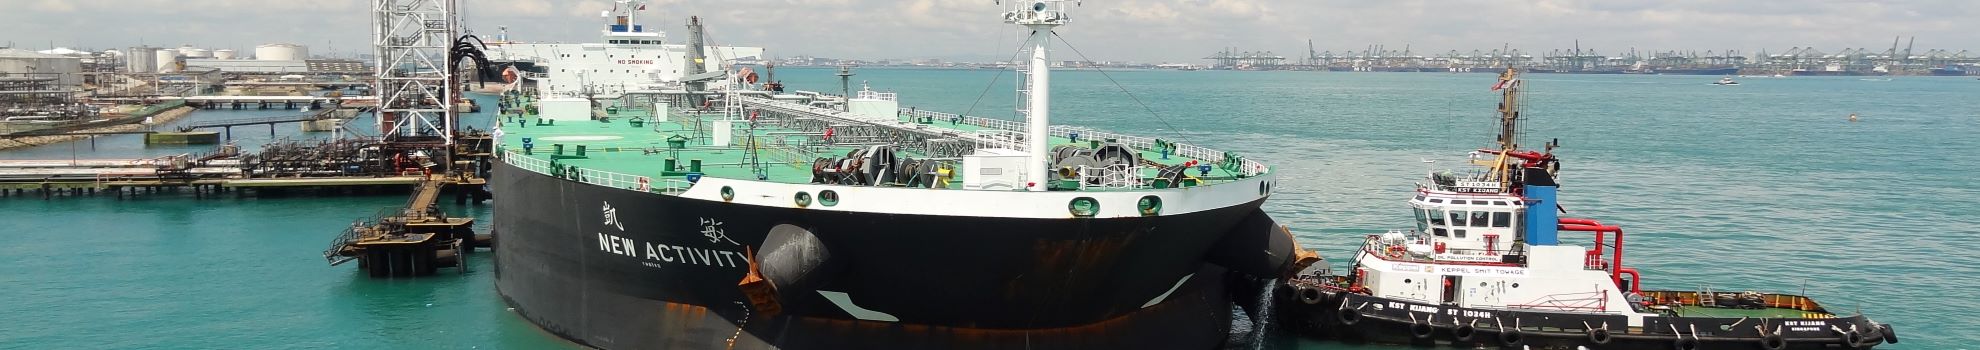 Oil tanker and Tug boat